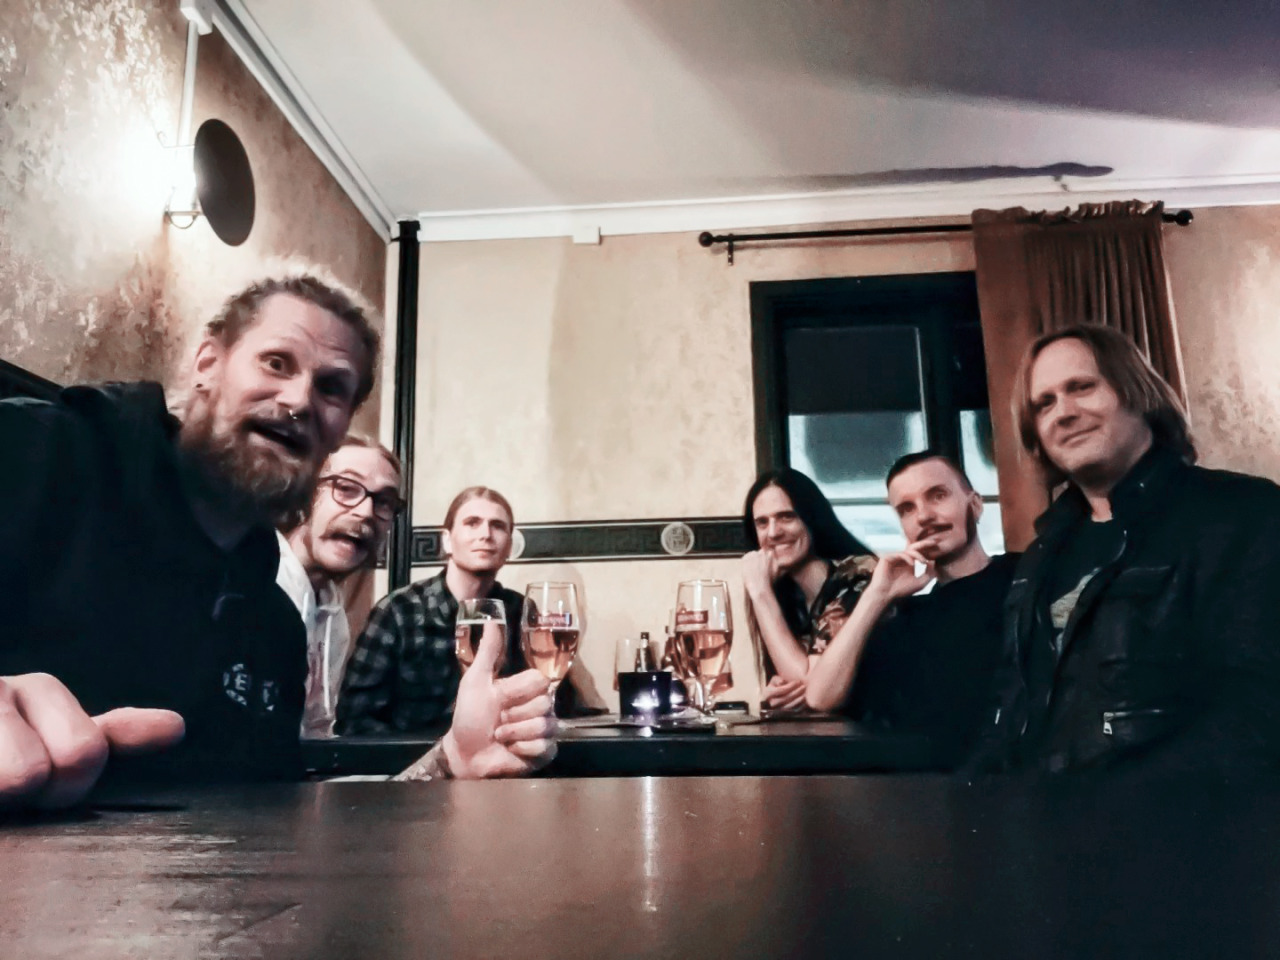 Kungen on instagram:“ #blessed”. #on instagram#backstage#avatar band#avatar metal#our edits#jonas jarlsby#tim öhrström#henrik sandelin#johannes eckerström#john alfredsson#swedish metal